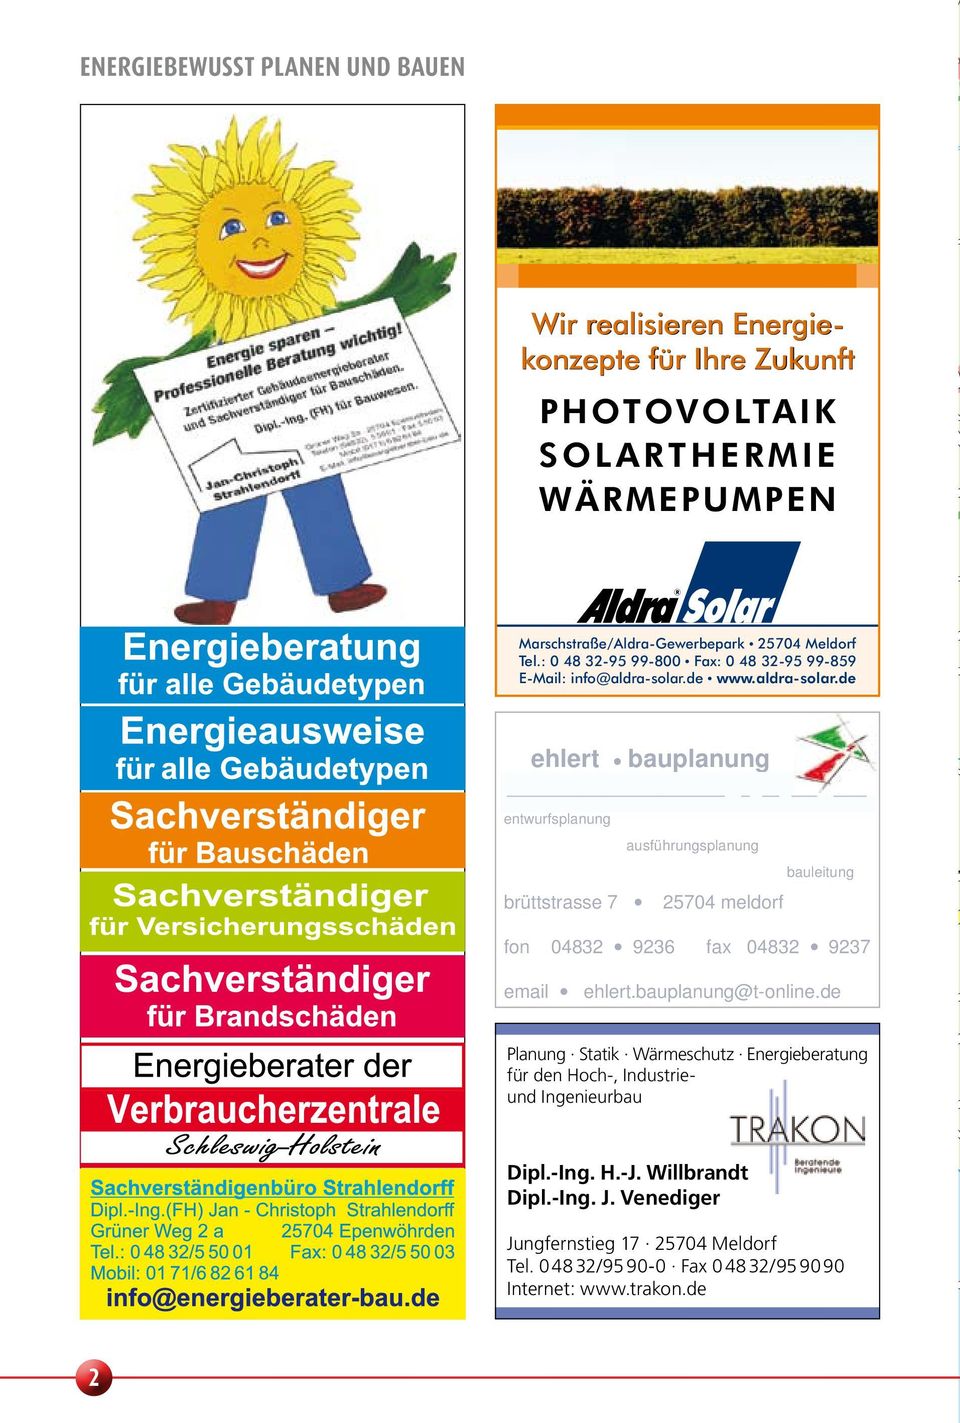 de www.aldra-solar.de ehlert bauplanung entwurfsplanung ausführungsplanung bauleitung brüttstrasse 7 25704 meldorf fon 04832 9236 fax 04832 9237 email ehlert.